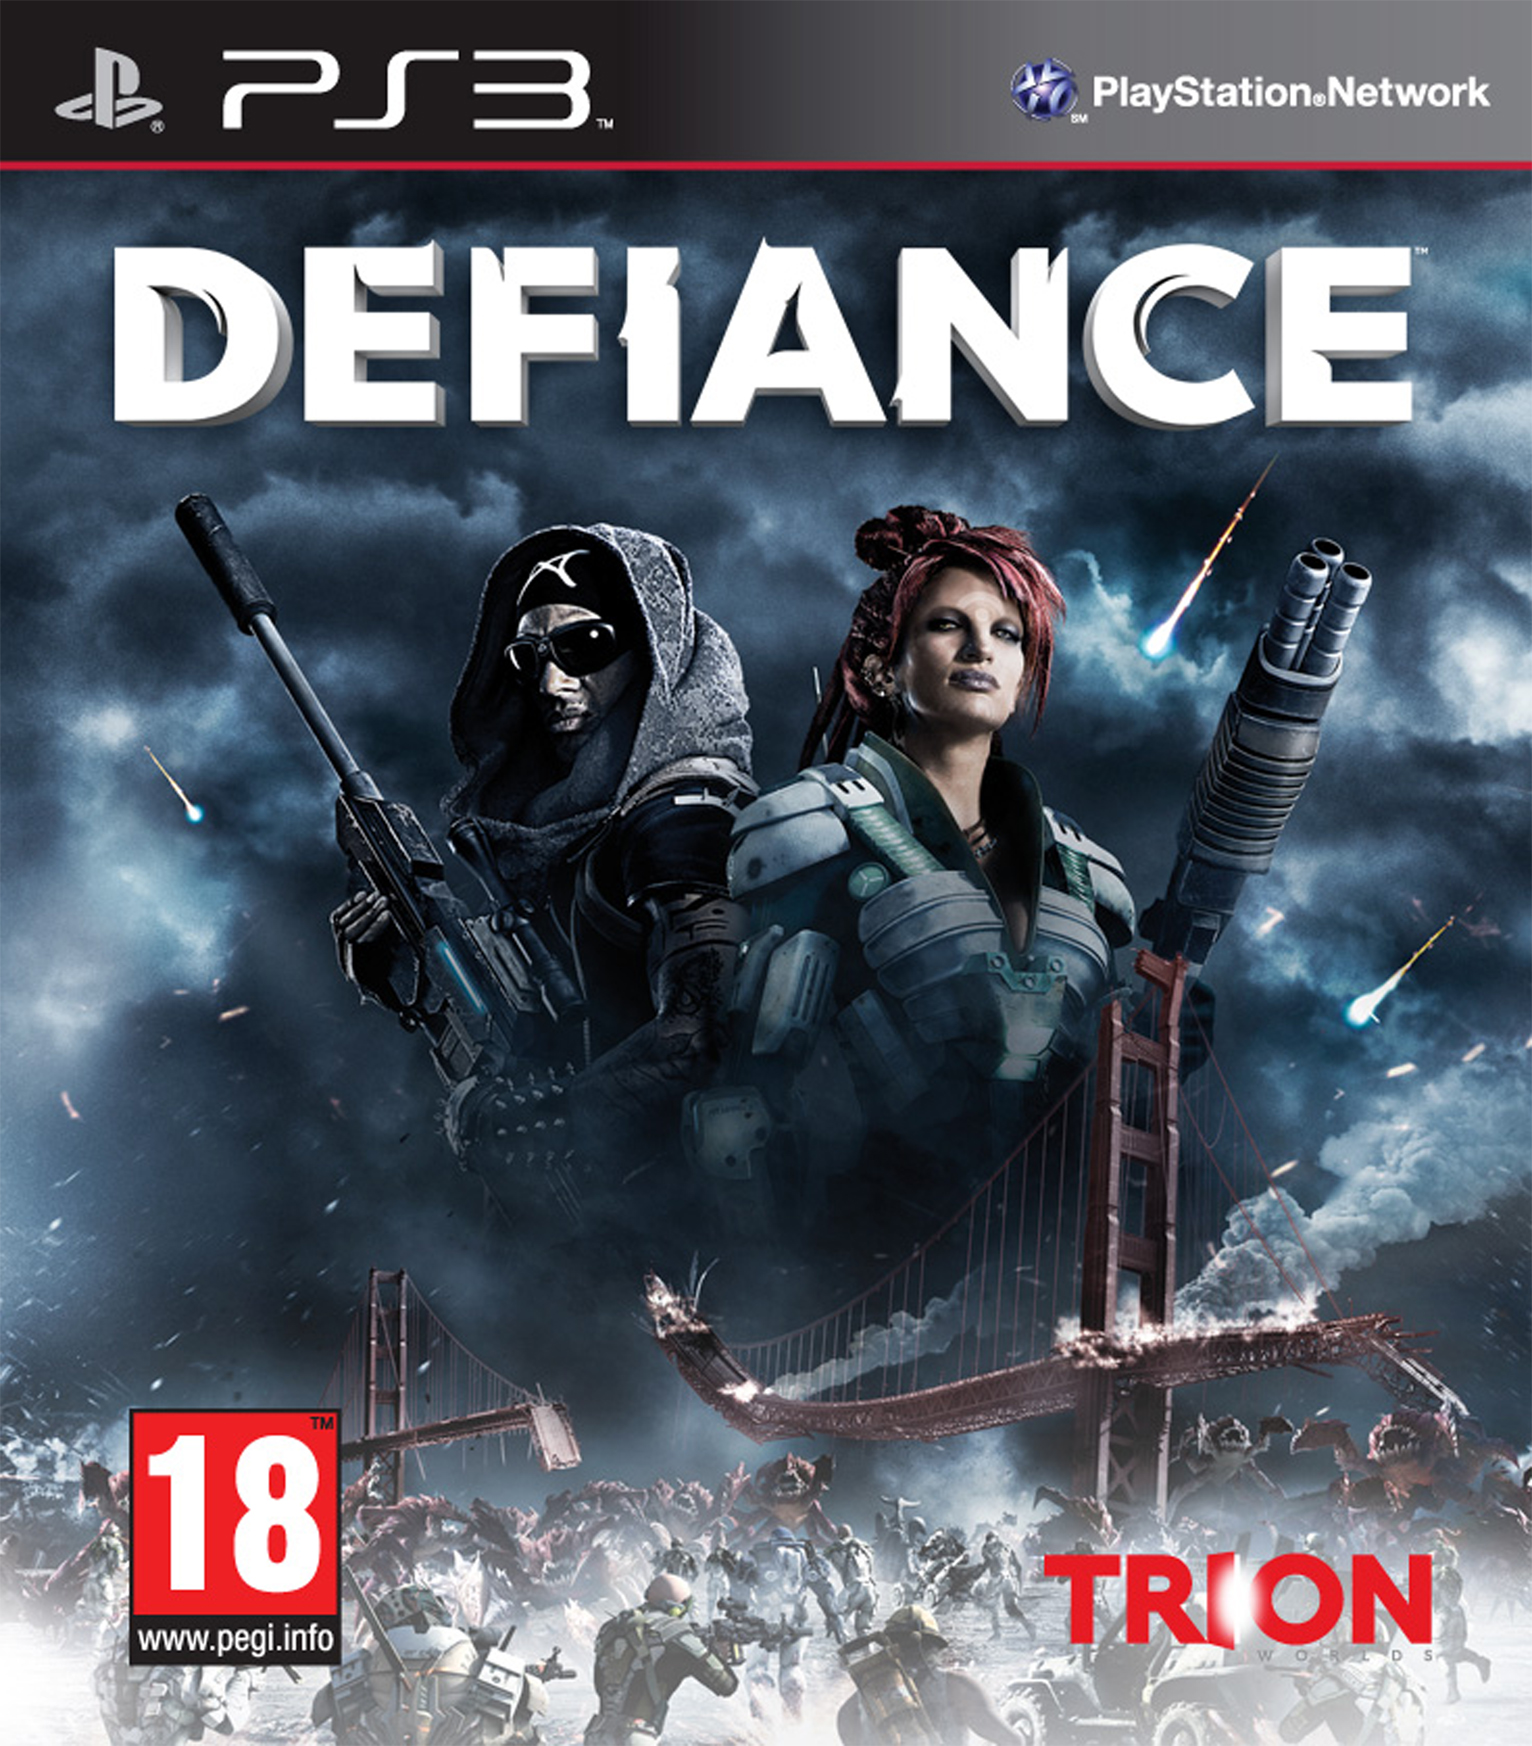 фото Игра defiance limited edition для playstation 3 bandai namco